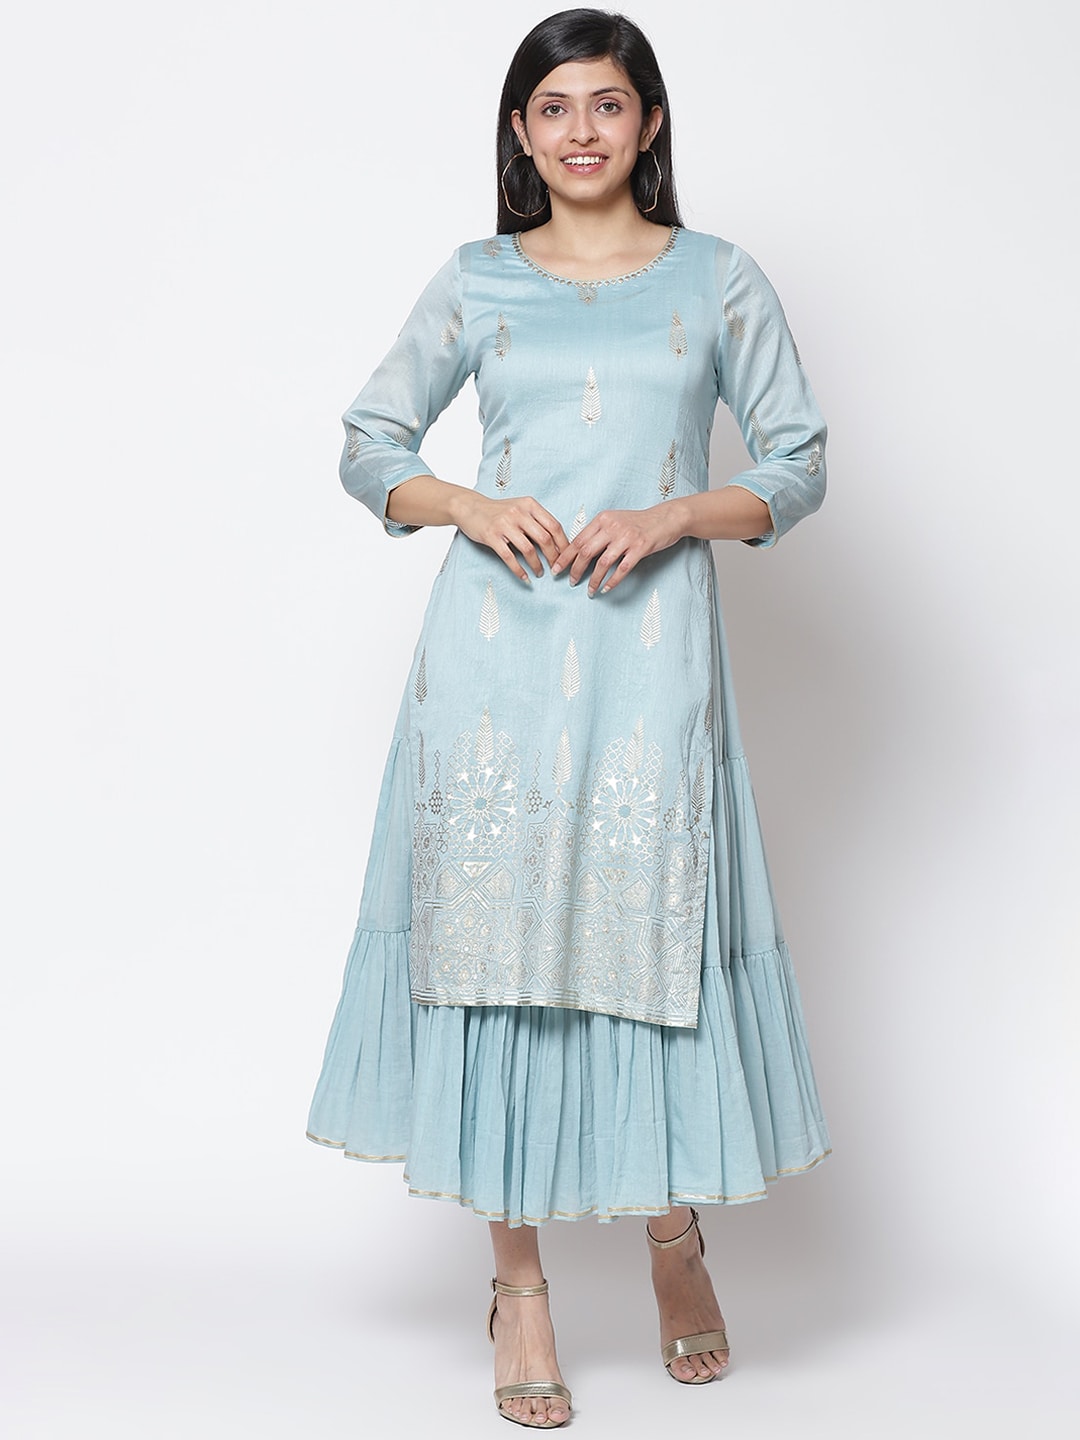 Biba Blue & Golden Ethnic Motifs Printed Layered Ethnic A-Line Midi Dress Price in India